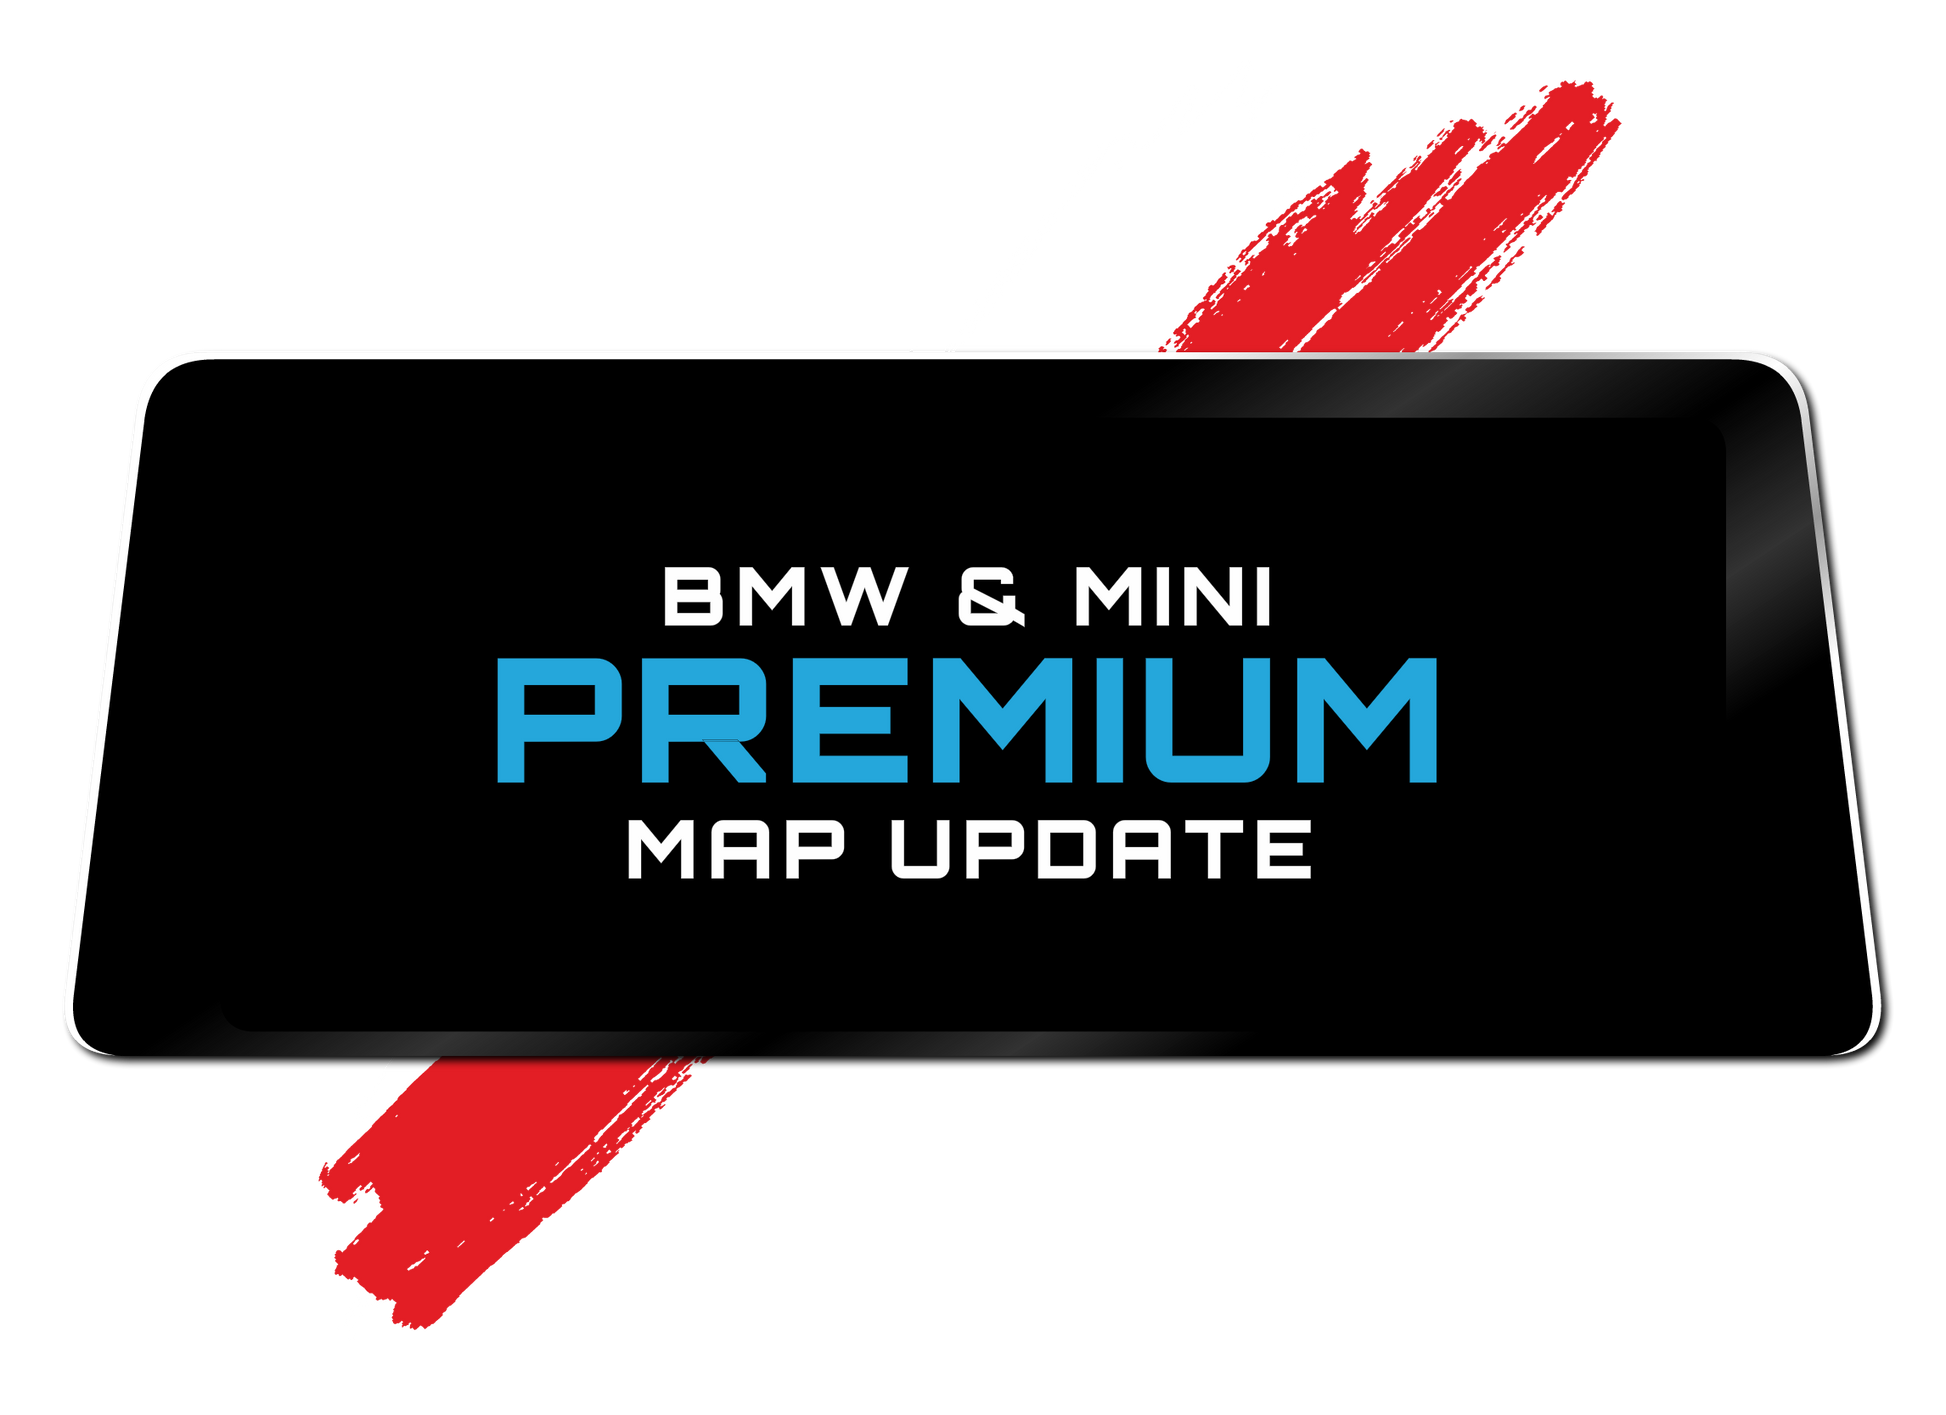 bmw and mini premium map update